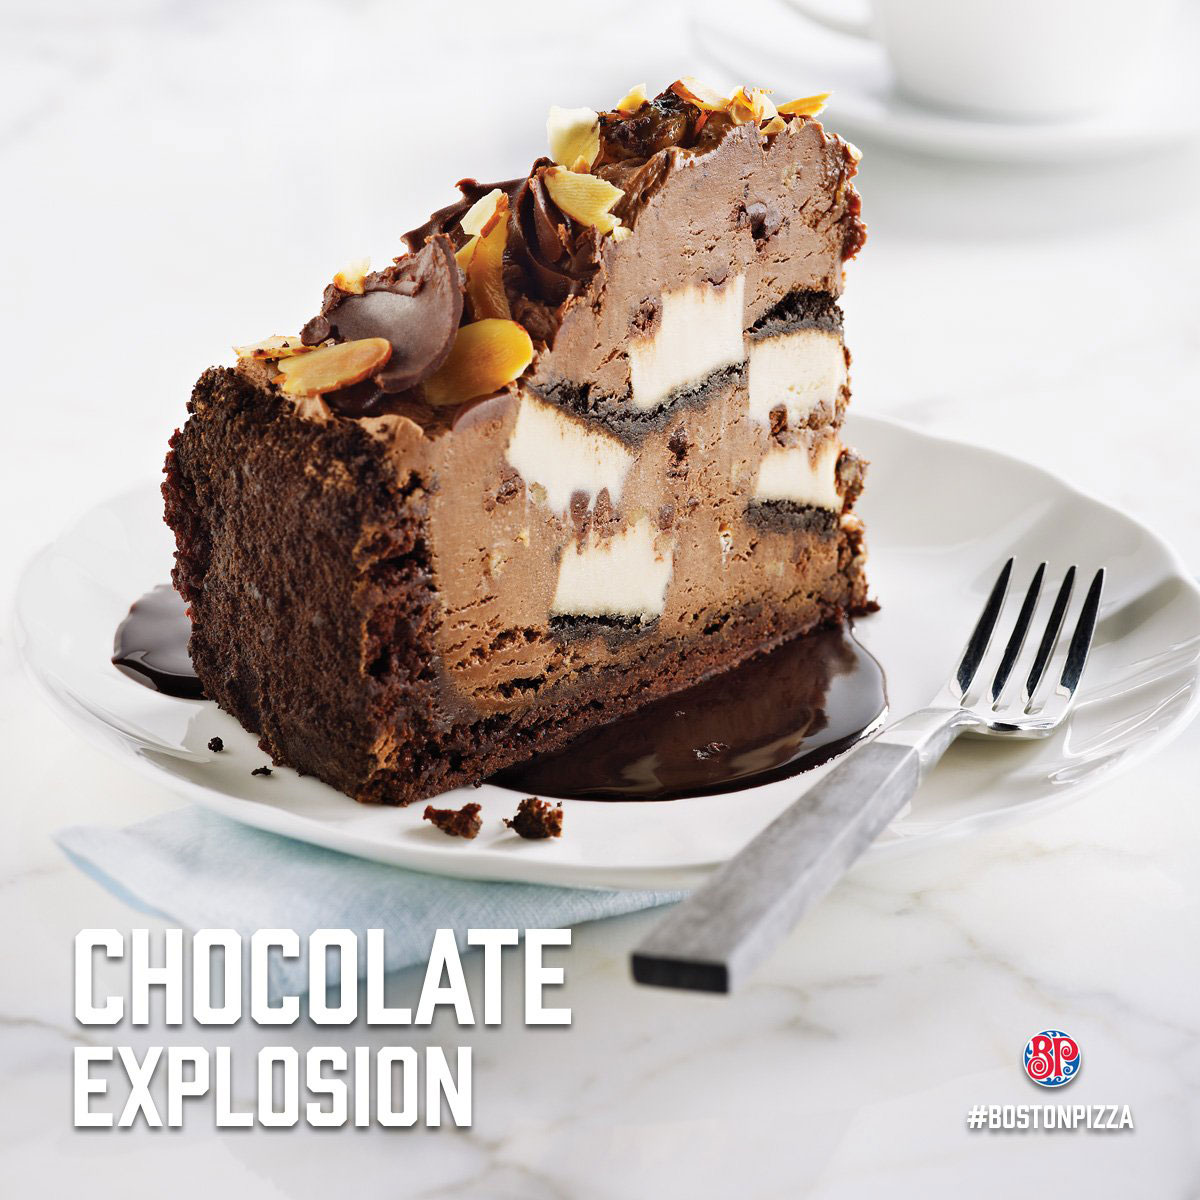 Chocolate Explosion Cake at BP